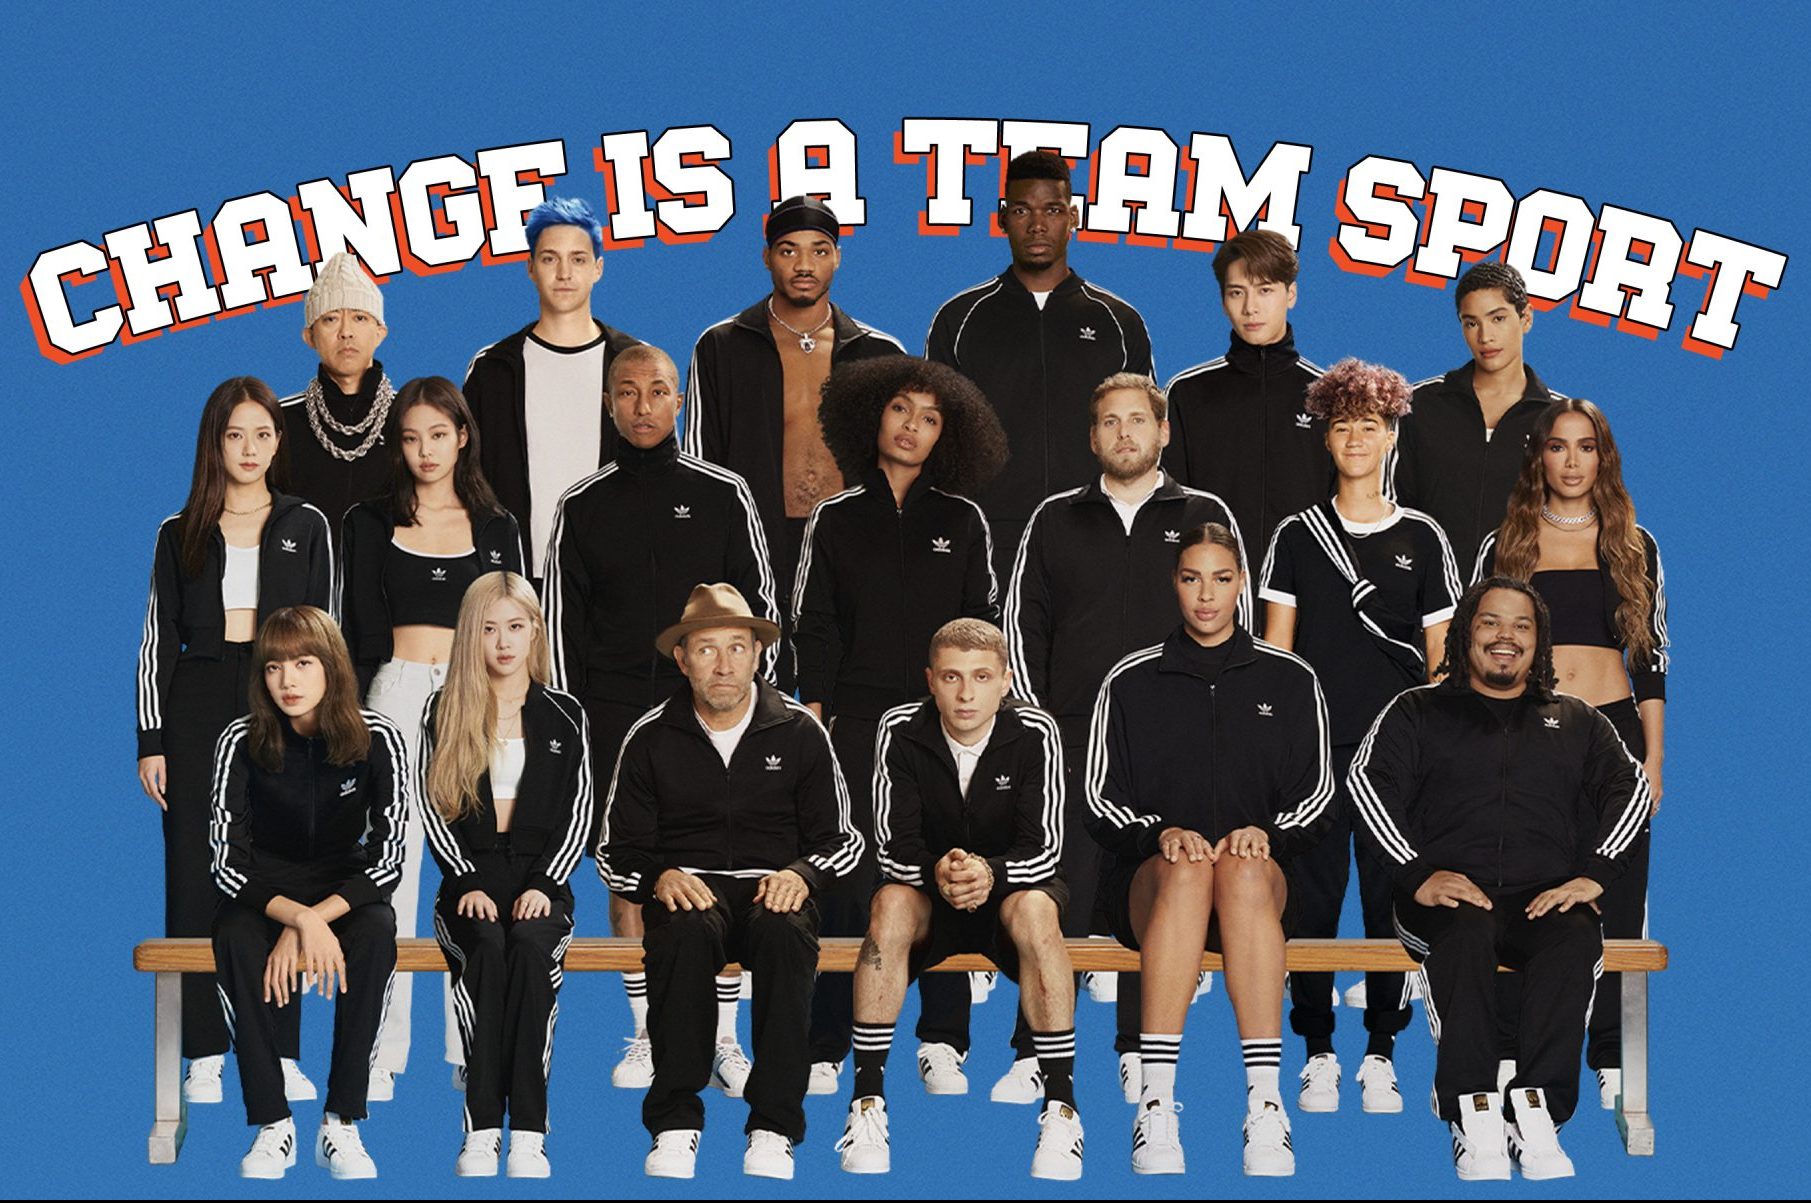 Sharpen chrysanthemum mat adidas Originals “Change Is a Team Sport” Campaign